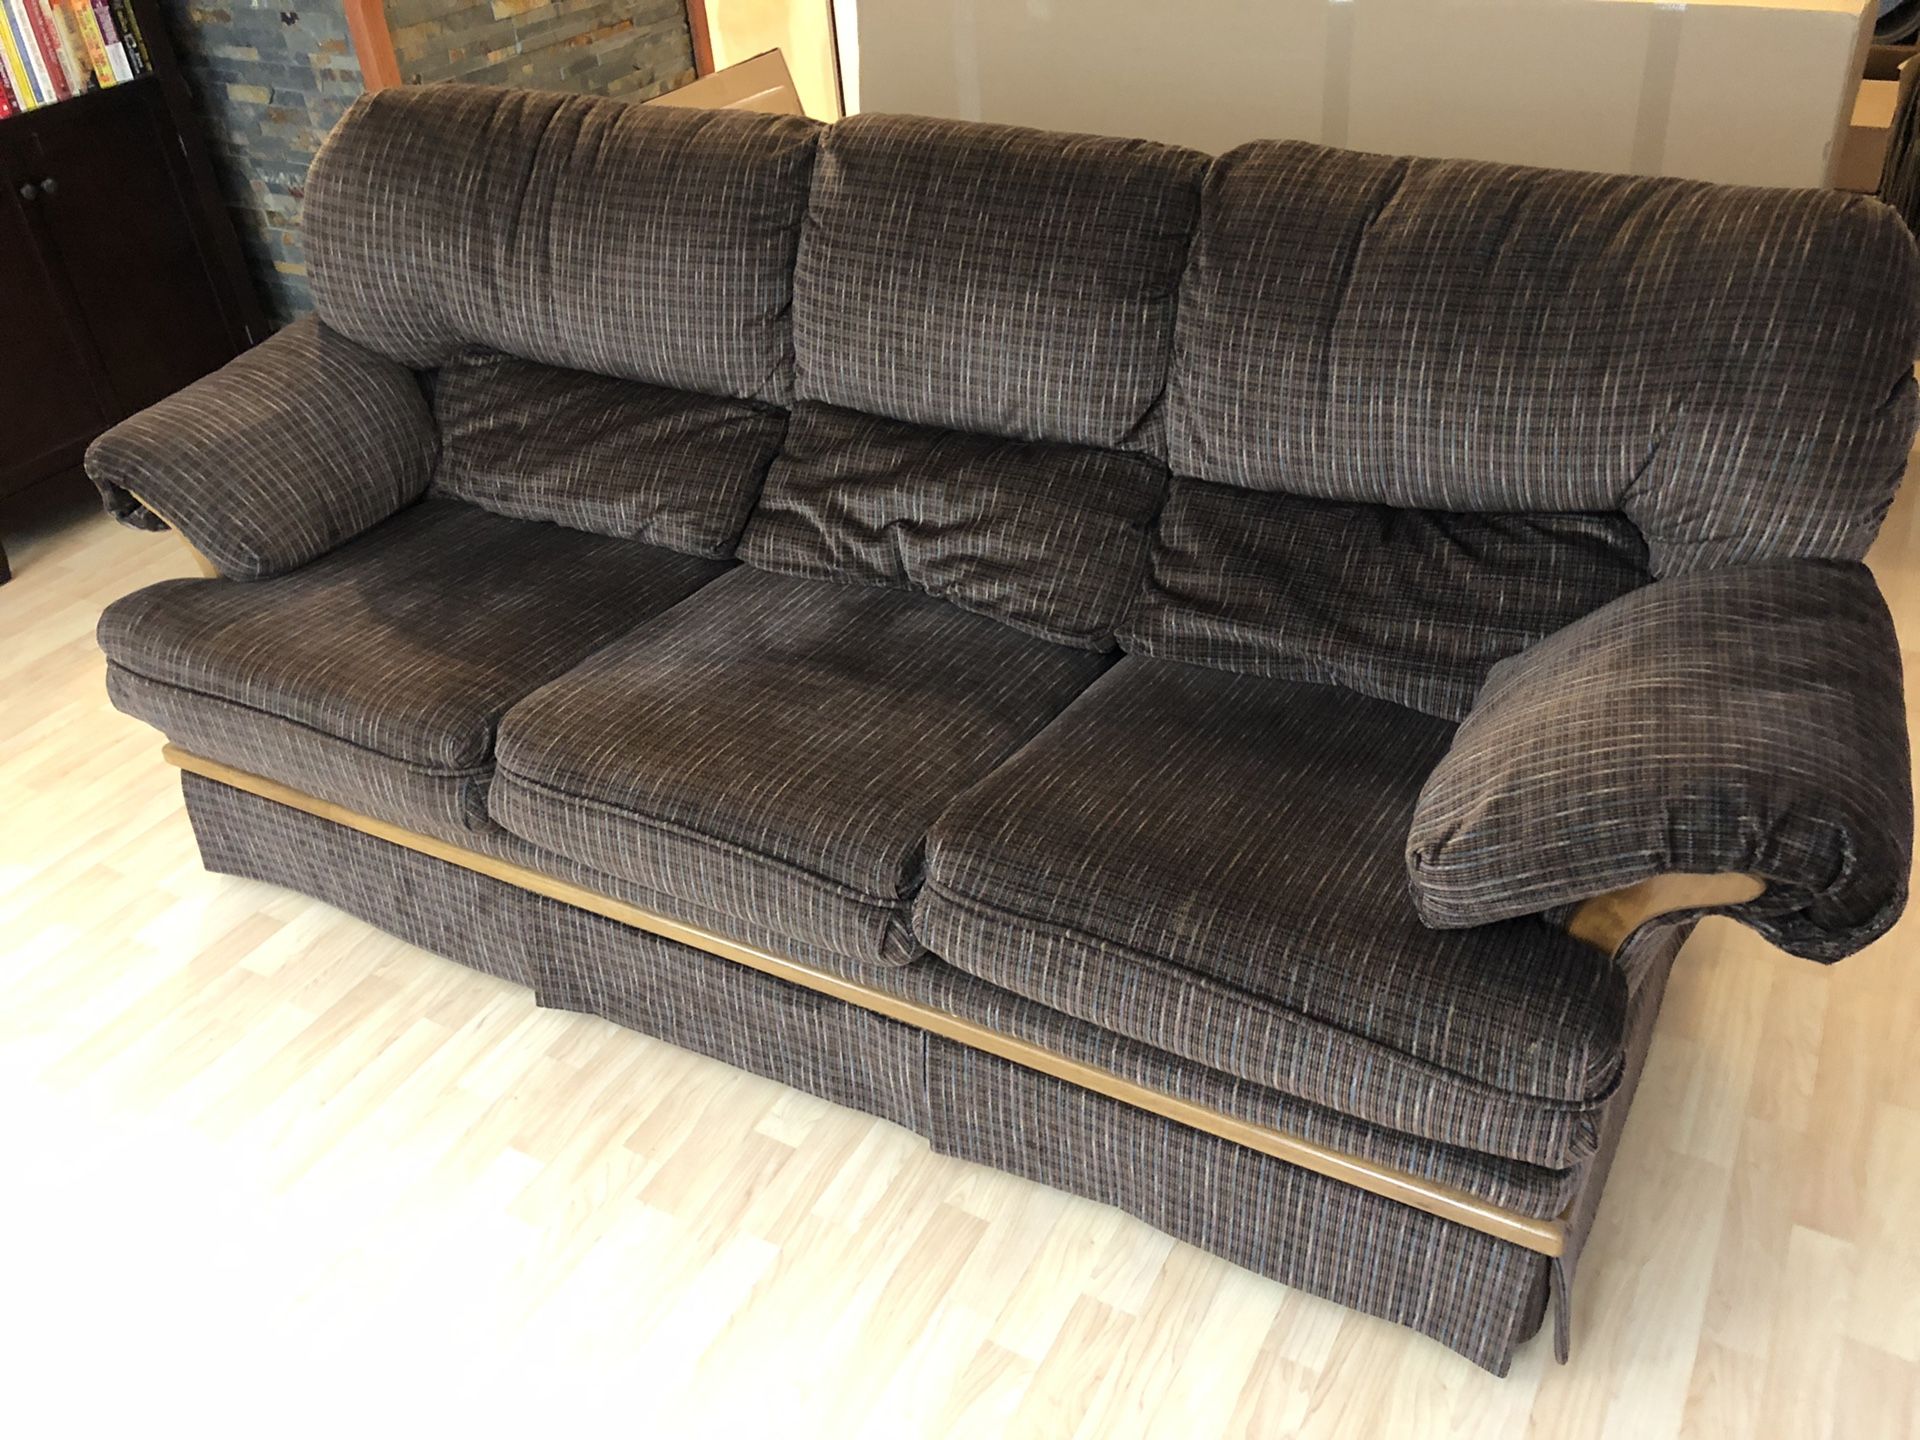 Sofa and Recliner